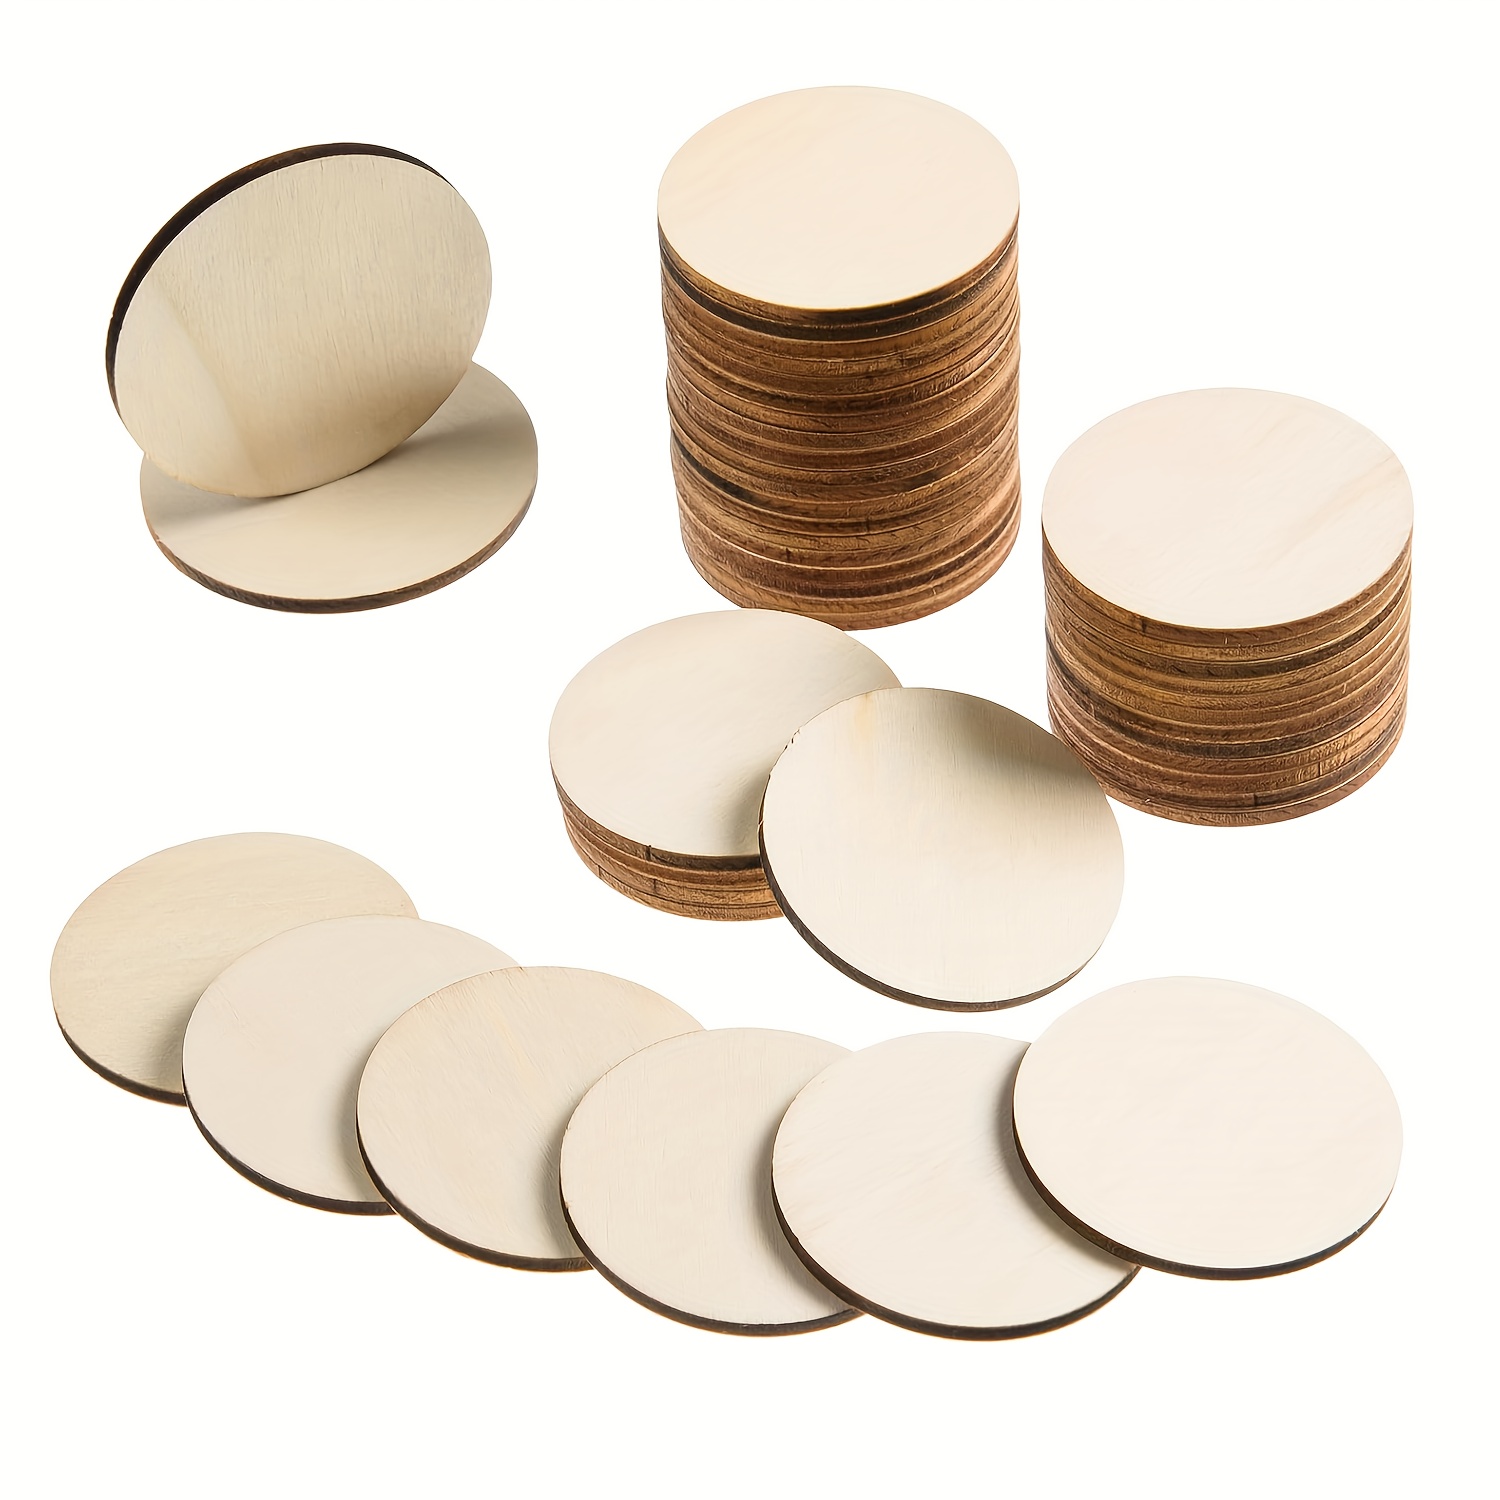 Round Wooden Discs, Wooden Circles